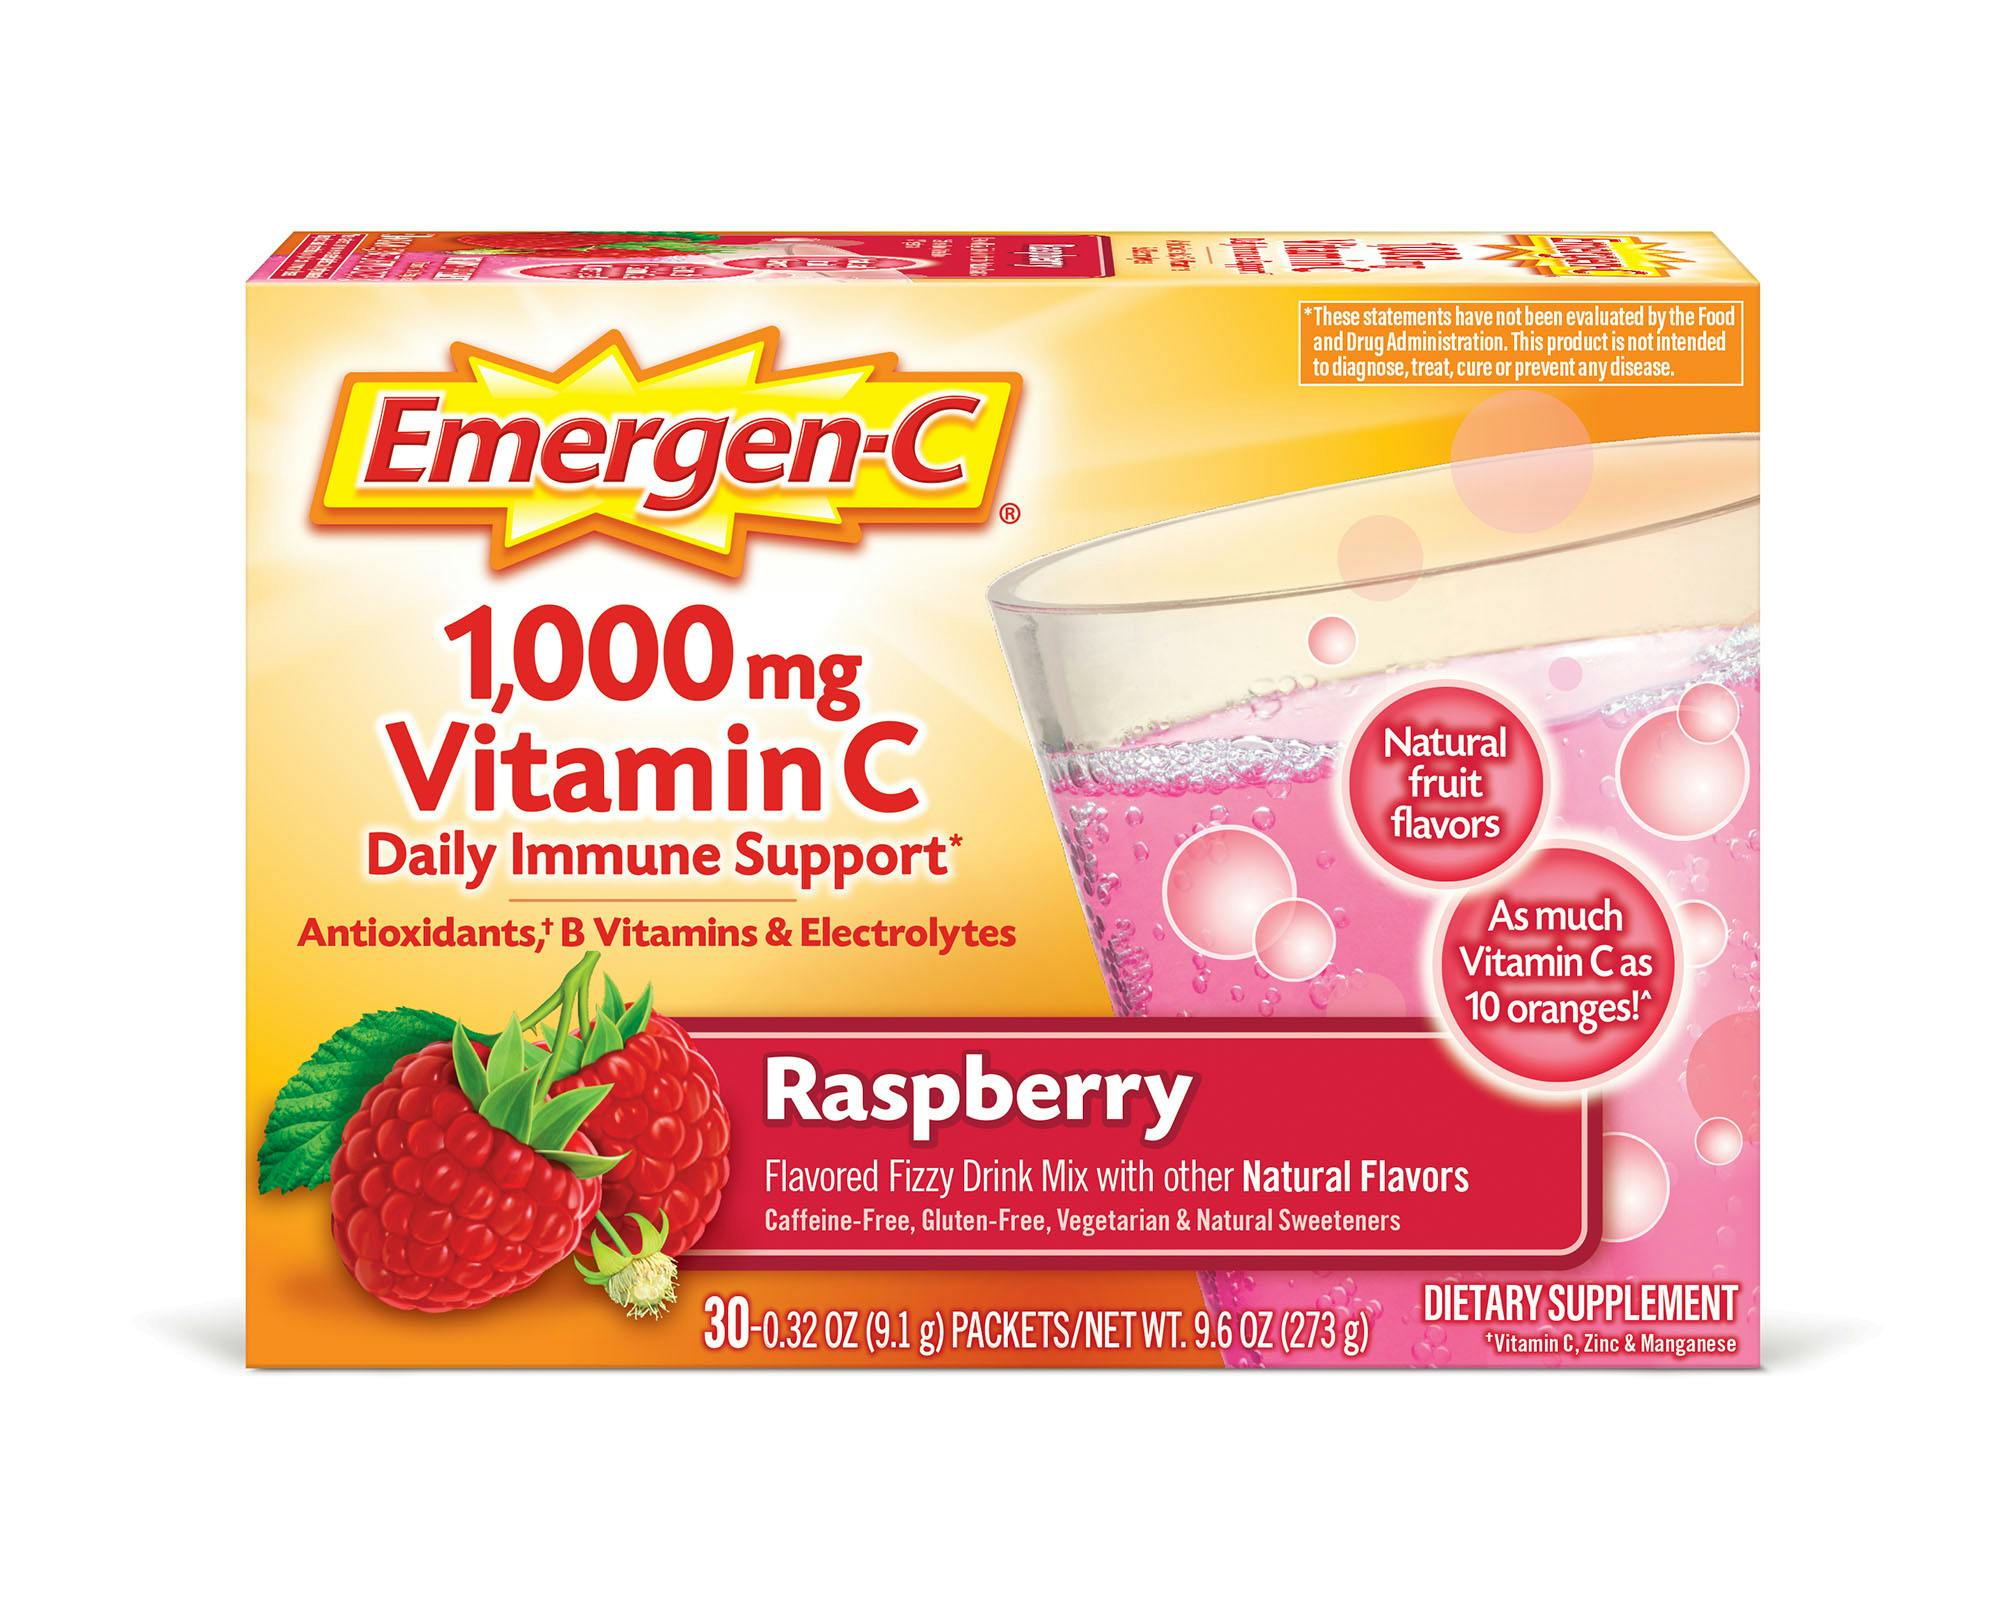 Raspberry Original Immune Support box